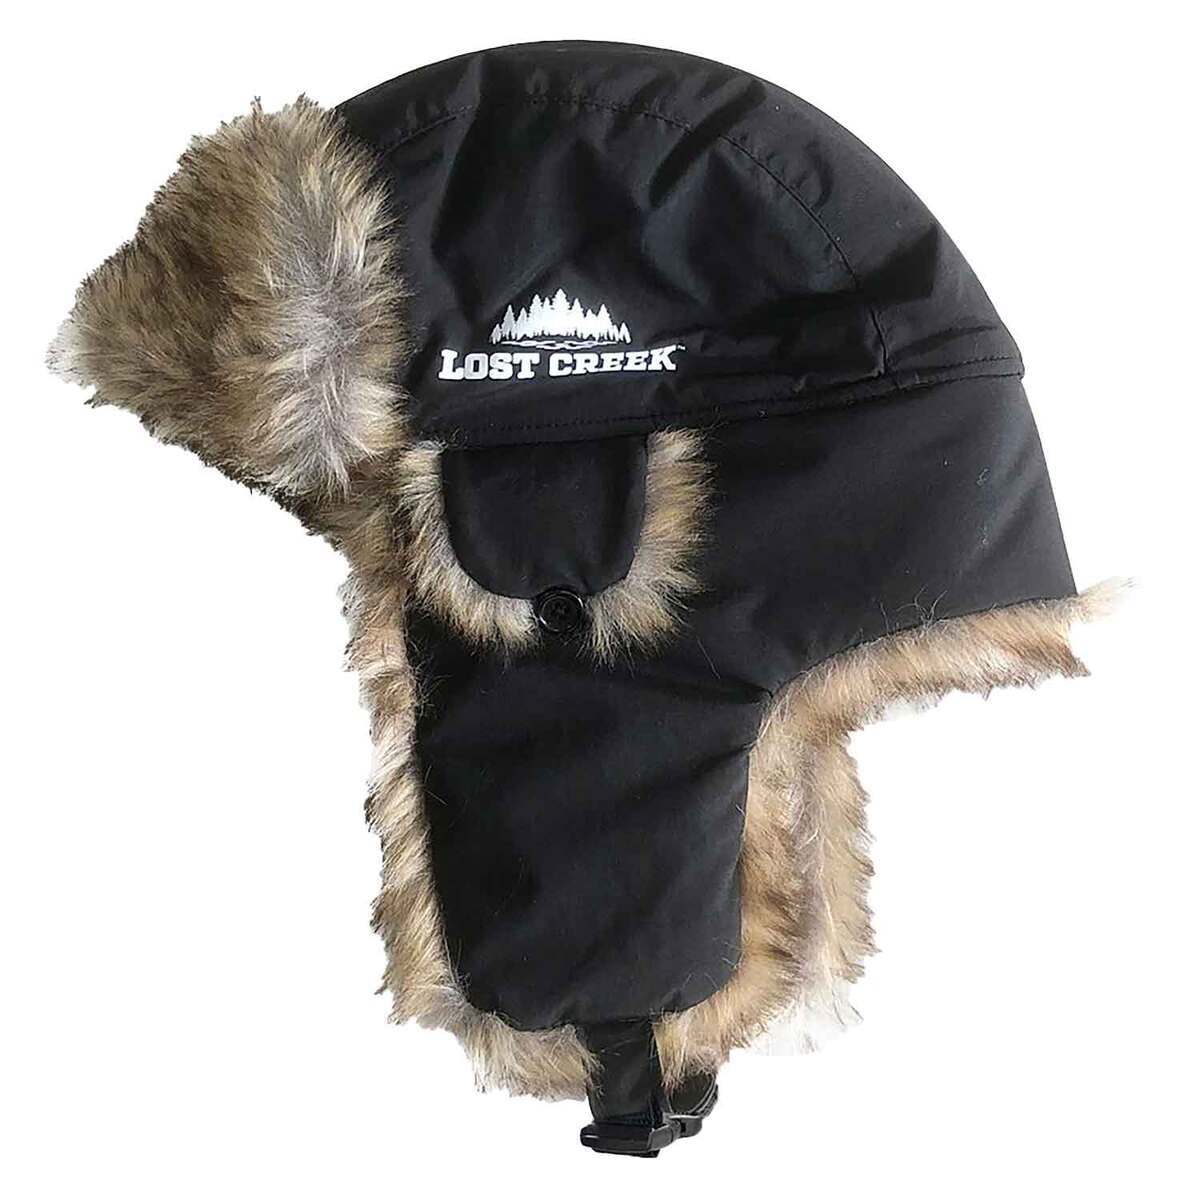 Lost Creek Fur Ice Fishing Hat - Black by Sportsman's Warehouse